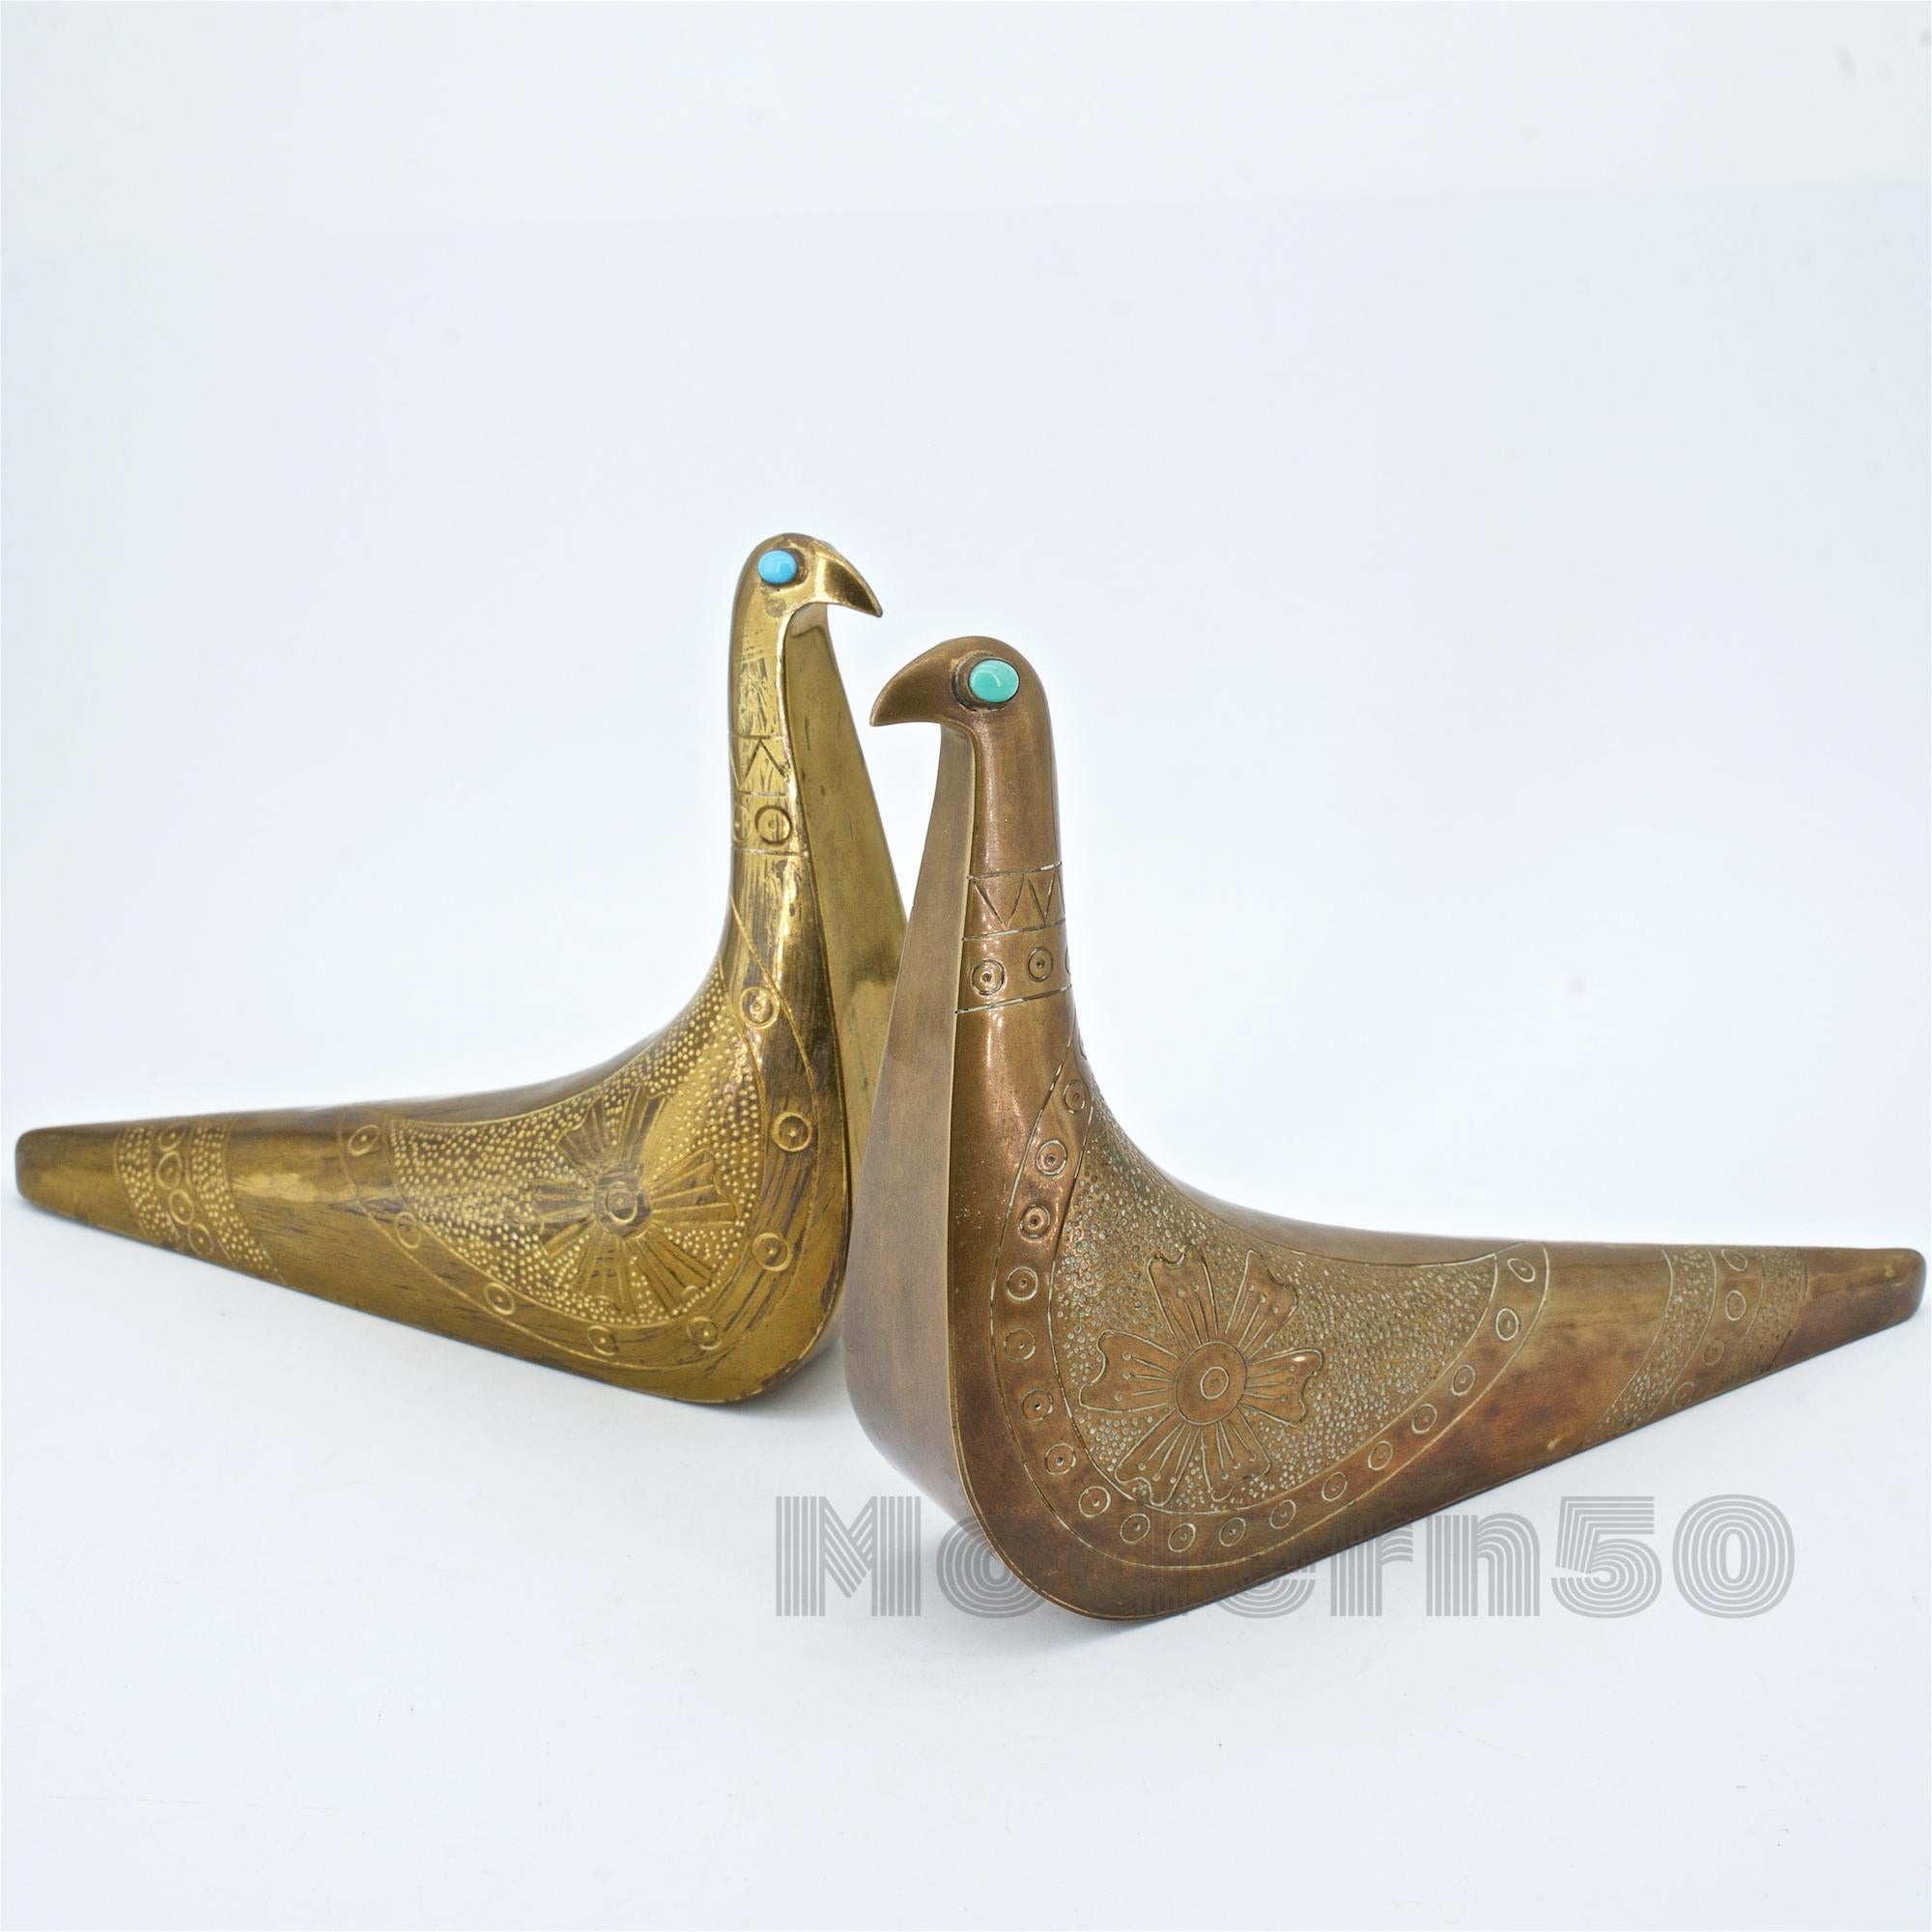 1960er Jahre Artisan Brass Metal Art Türkis Edelstein Rebhuhn Taube Vogel Skulpturen (Messing) im Angebot